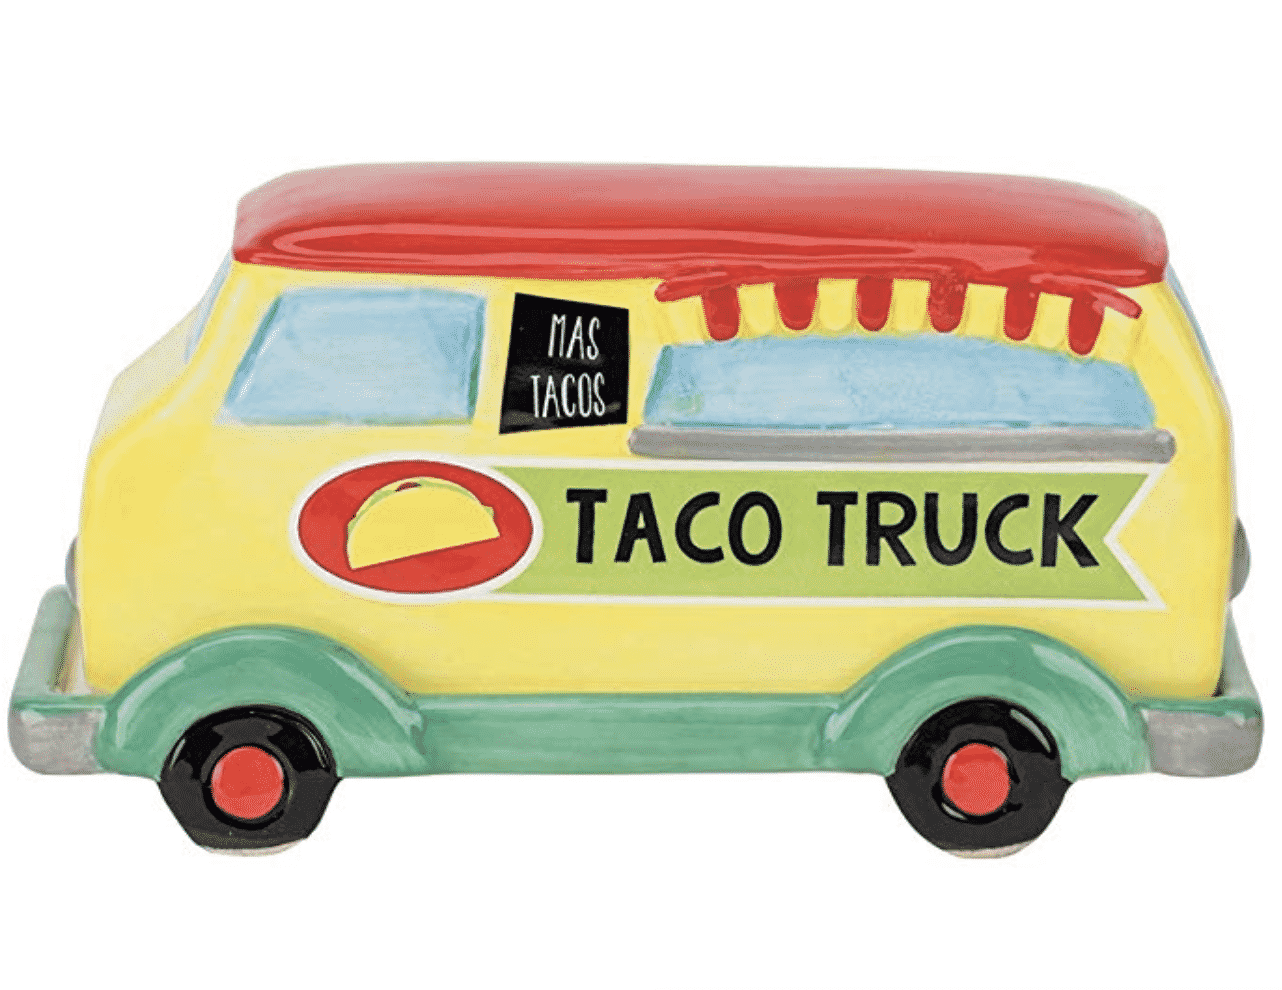 butter-dish-taco-truck